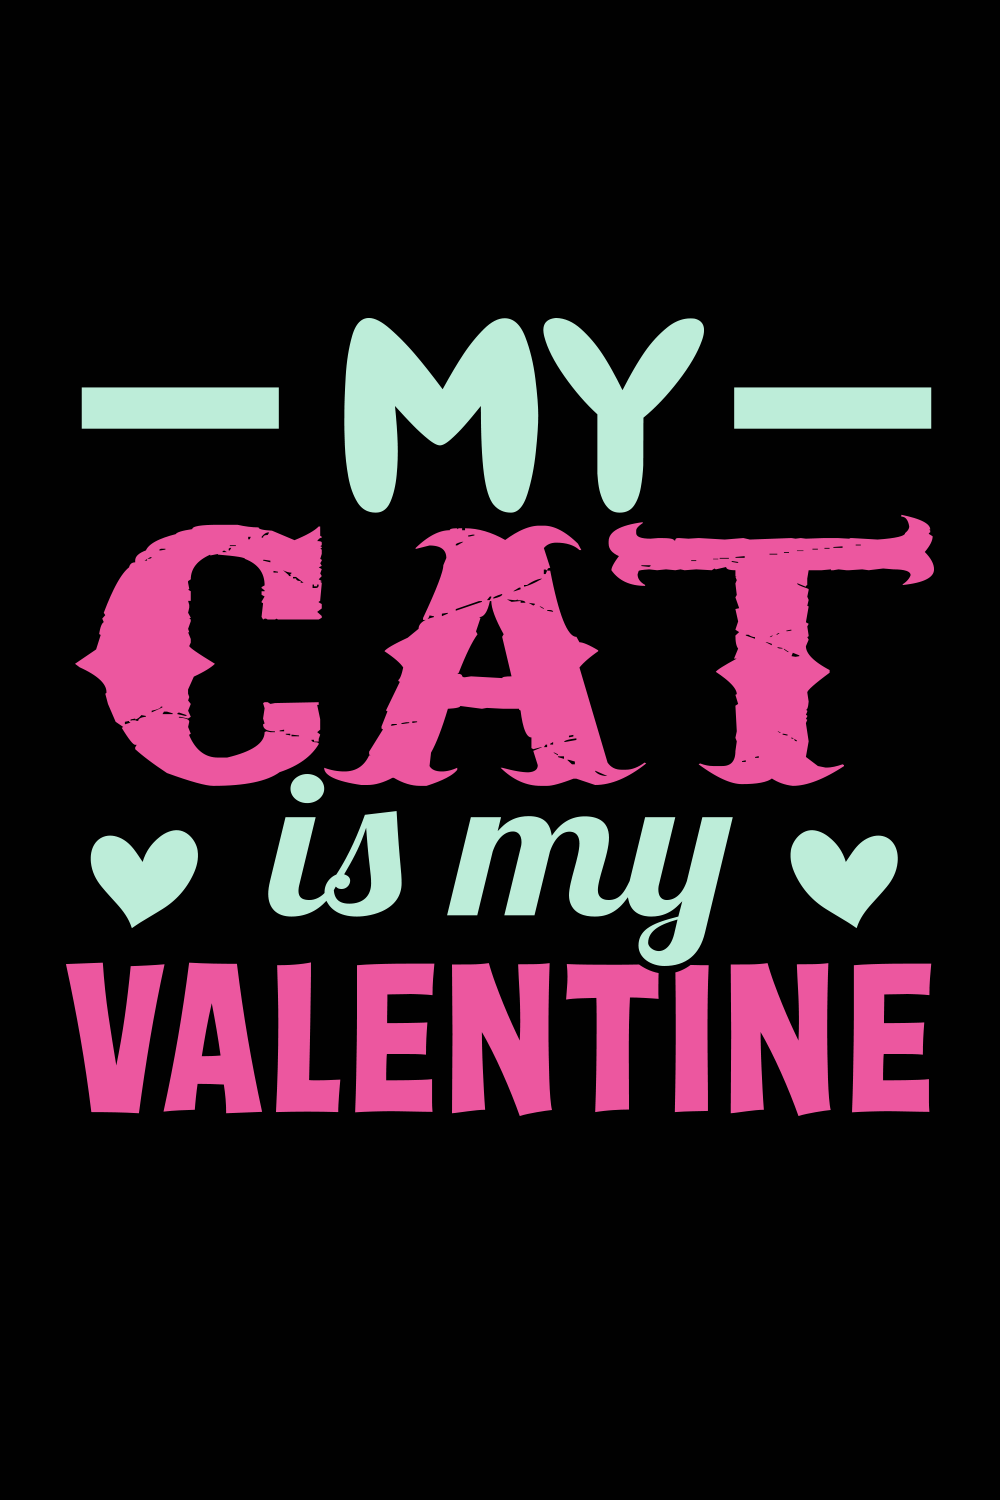 My Cat is My Valentine T-Shirt Design pinterest image.